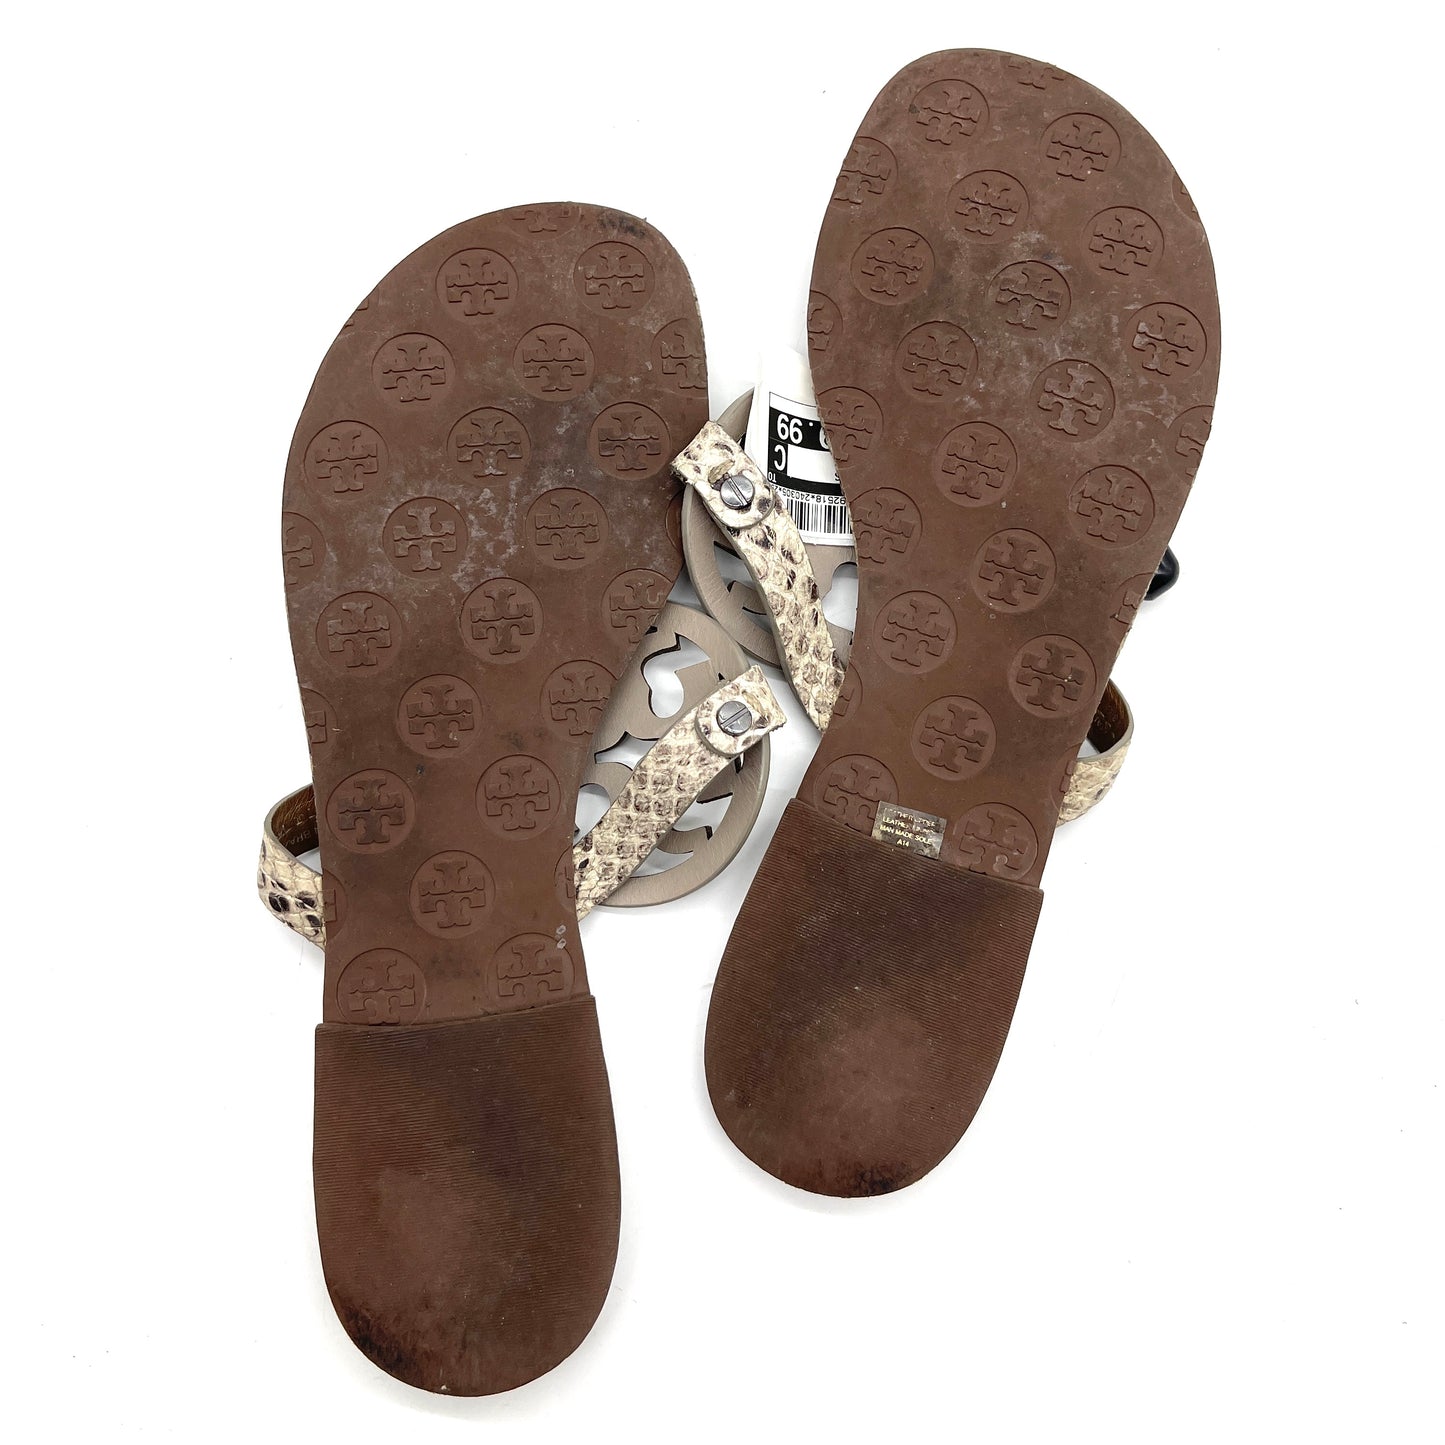 Sandals Flip Flops By Tory Burch  Size: 10.5